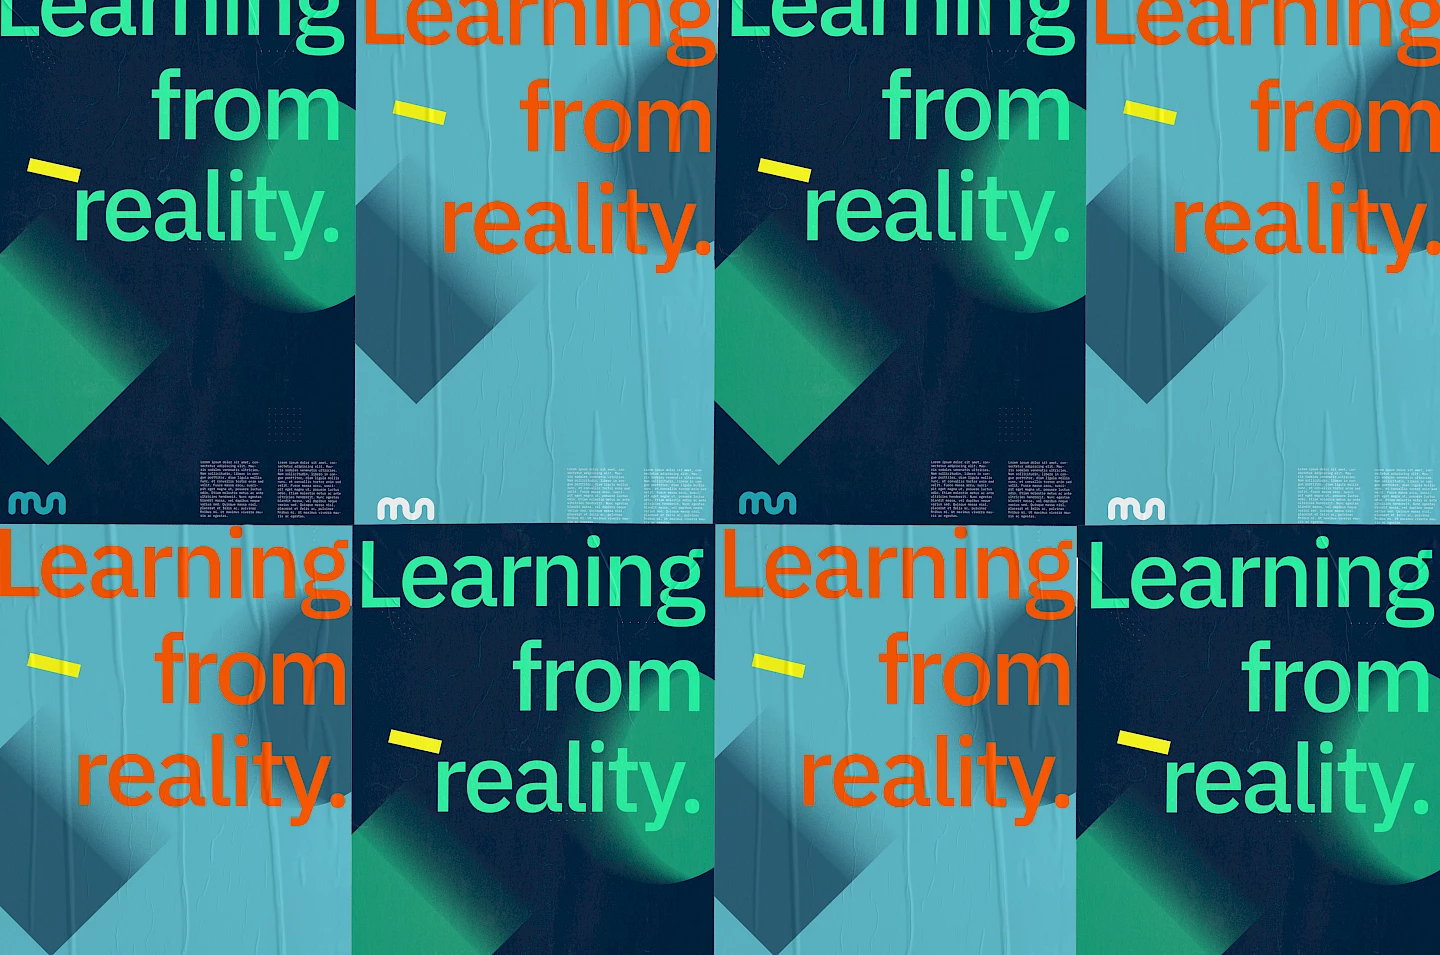 narrative learning move reality claim branding unibertsitatea mockup mondragon posters strategy from 